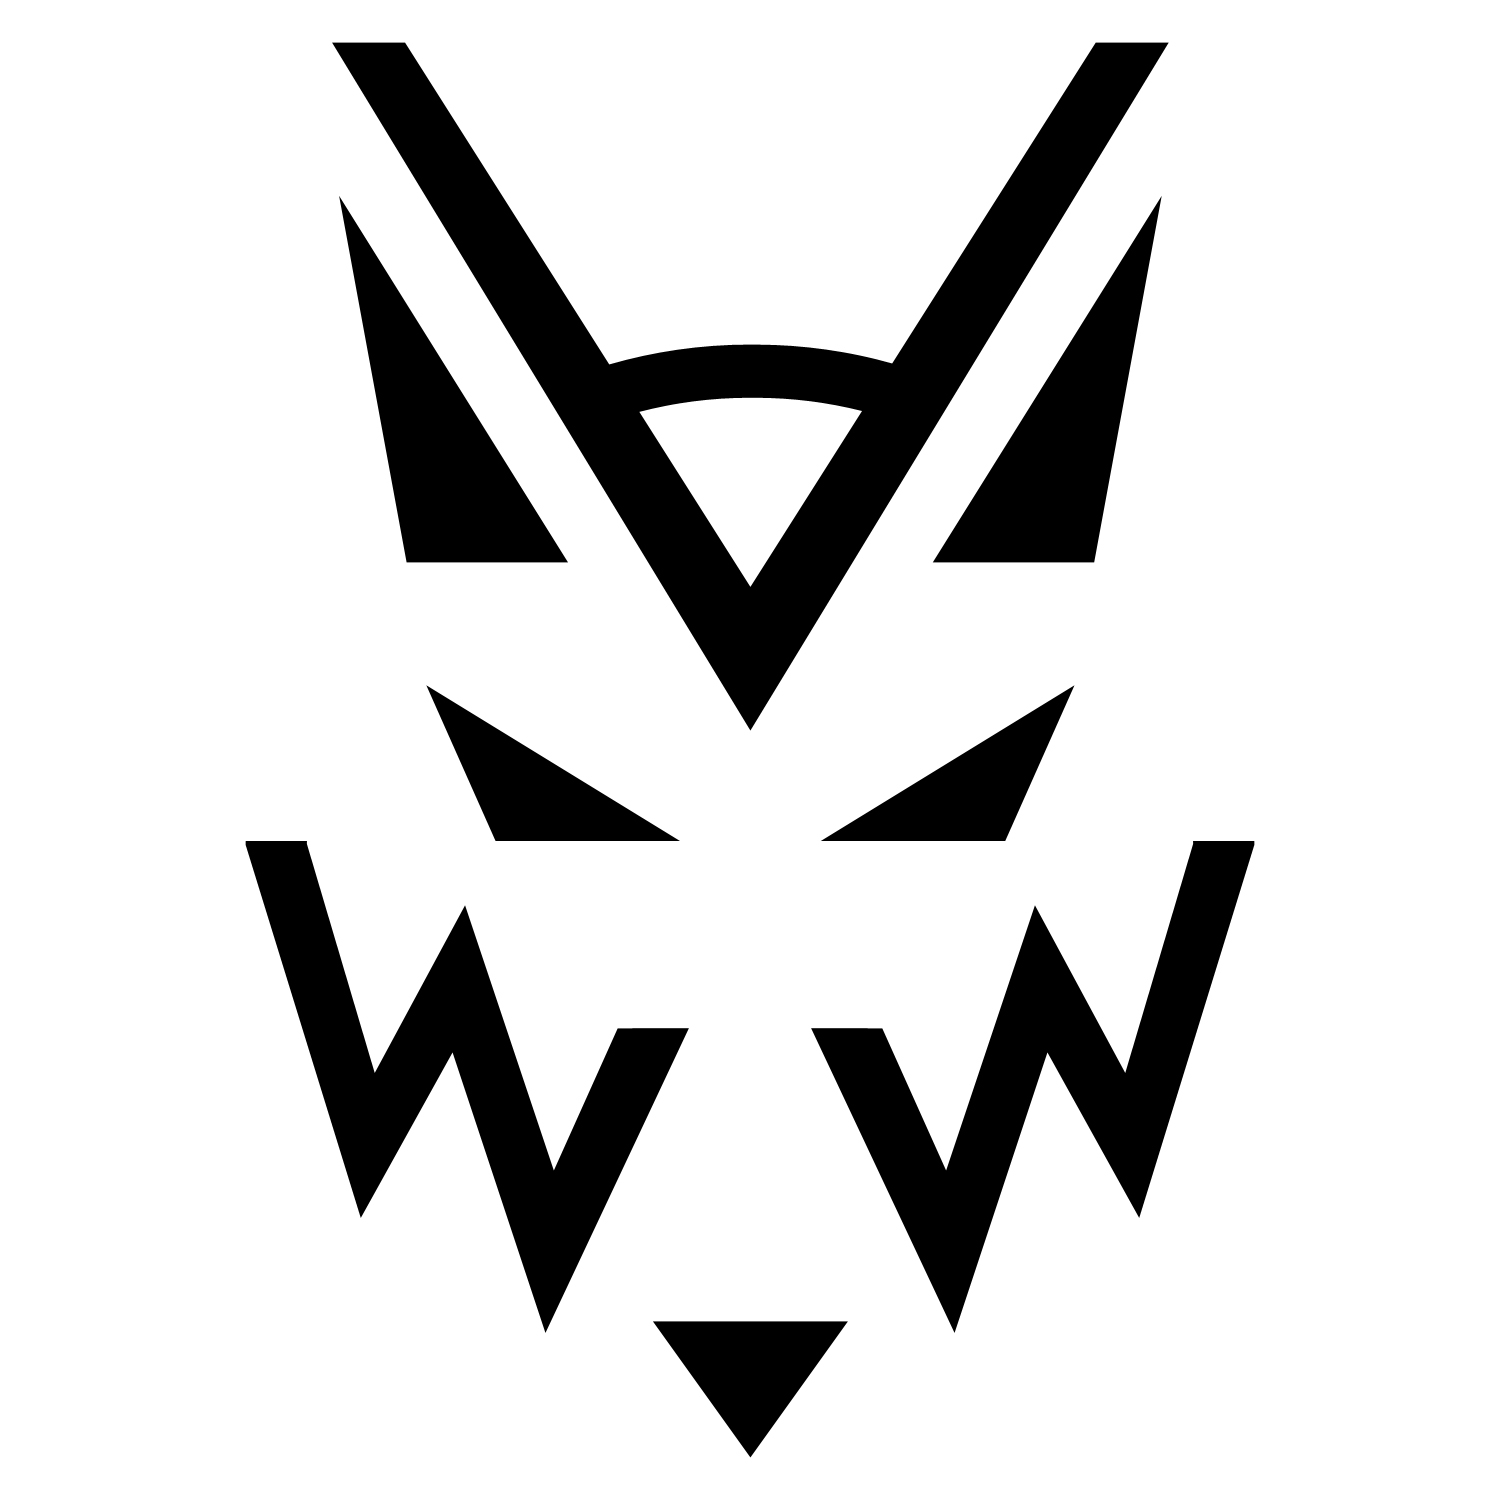 Wolf Williams – Voice Actor